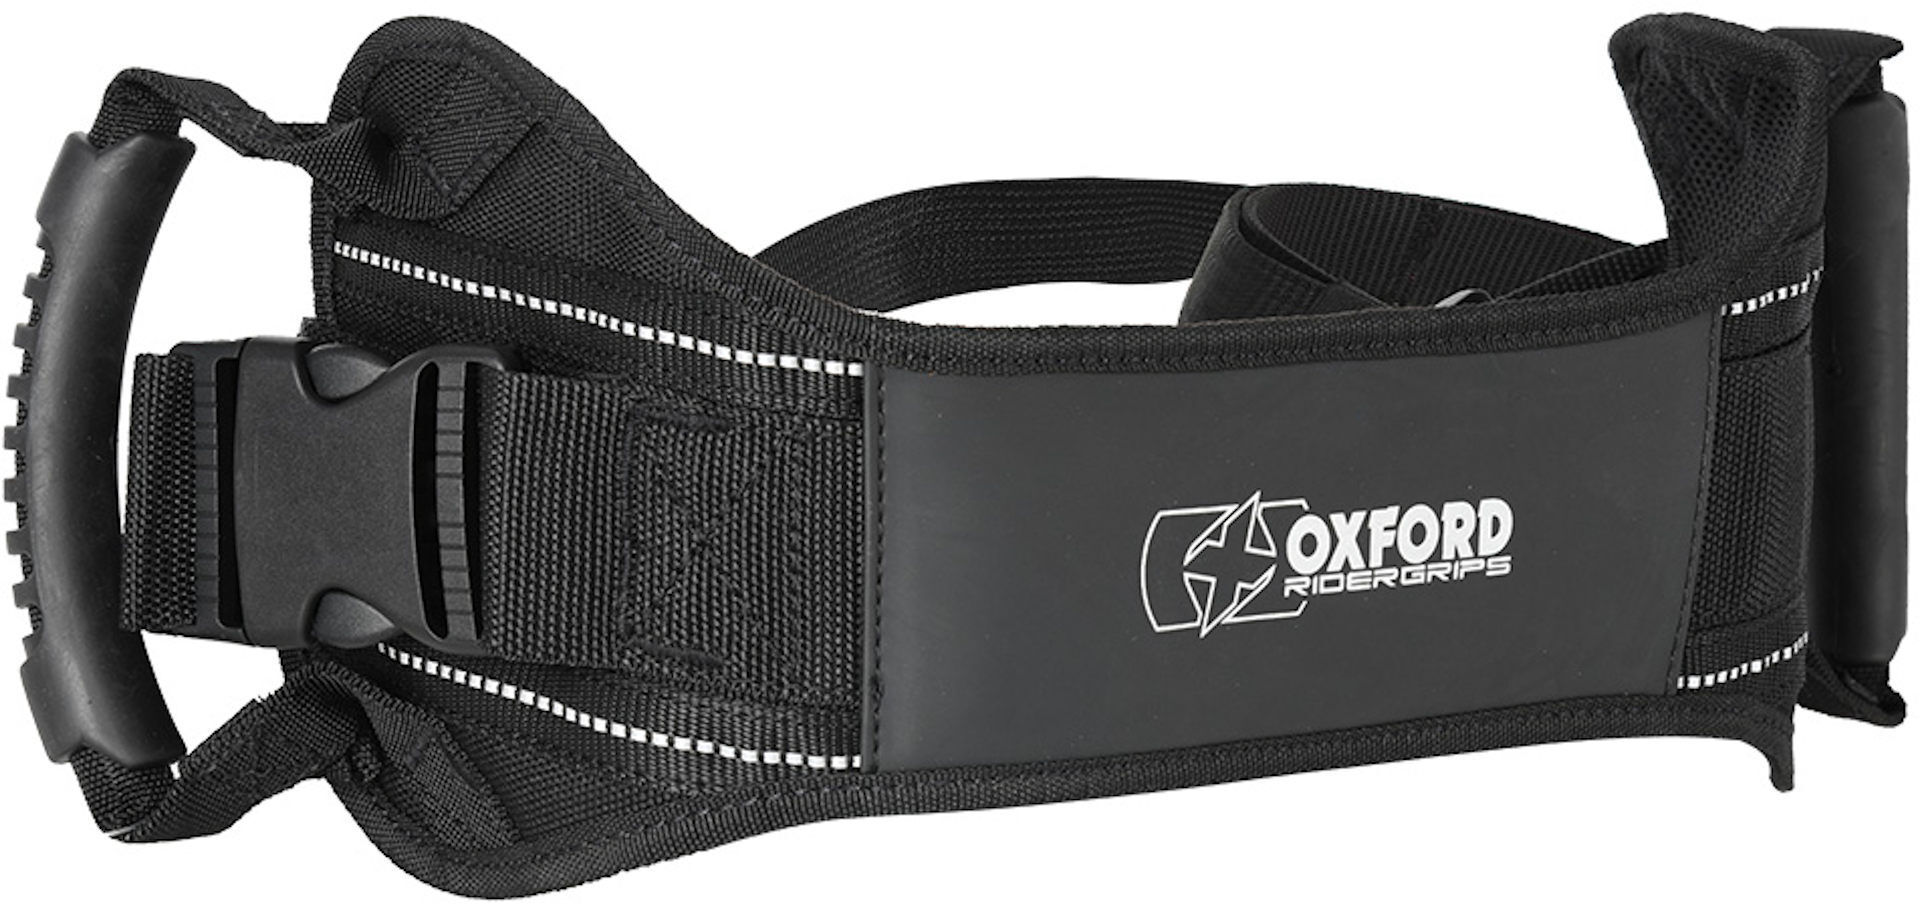 Oxford RiderGrips Cinturón - Negro (un tamaño)